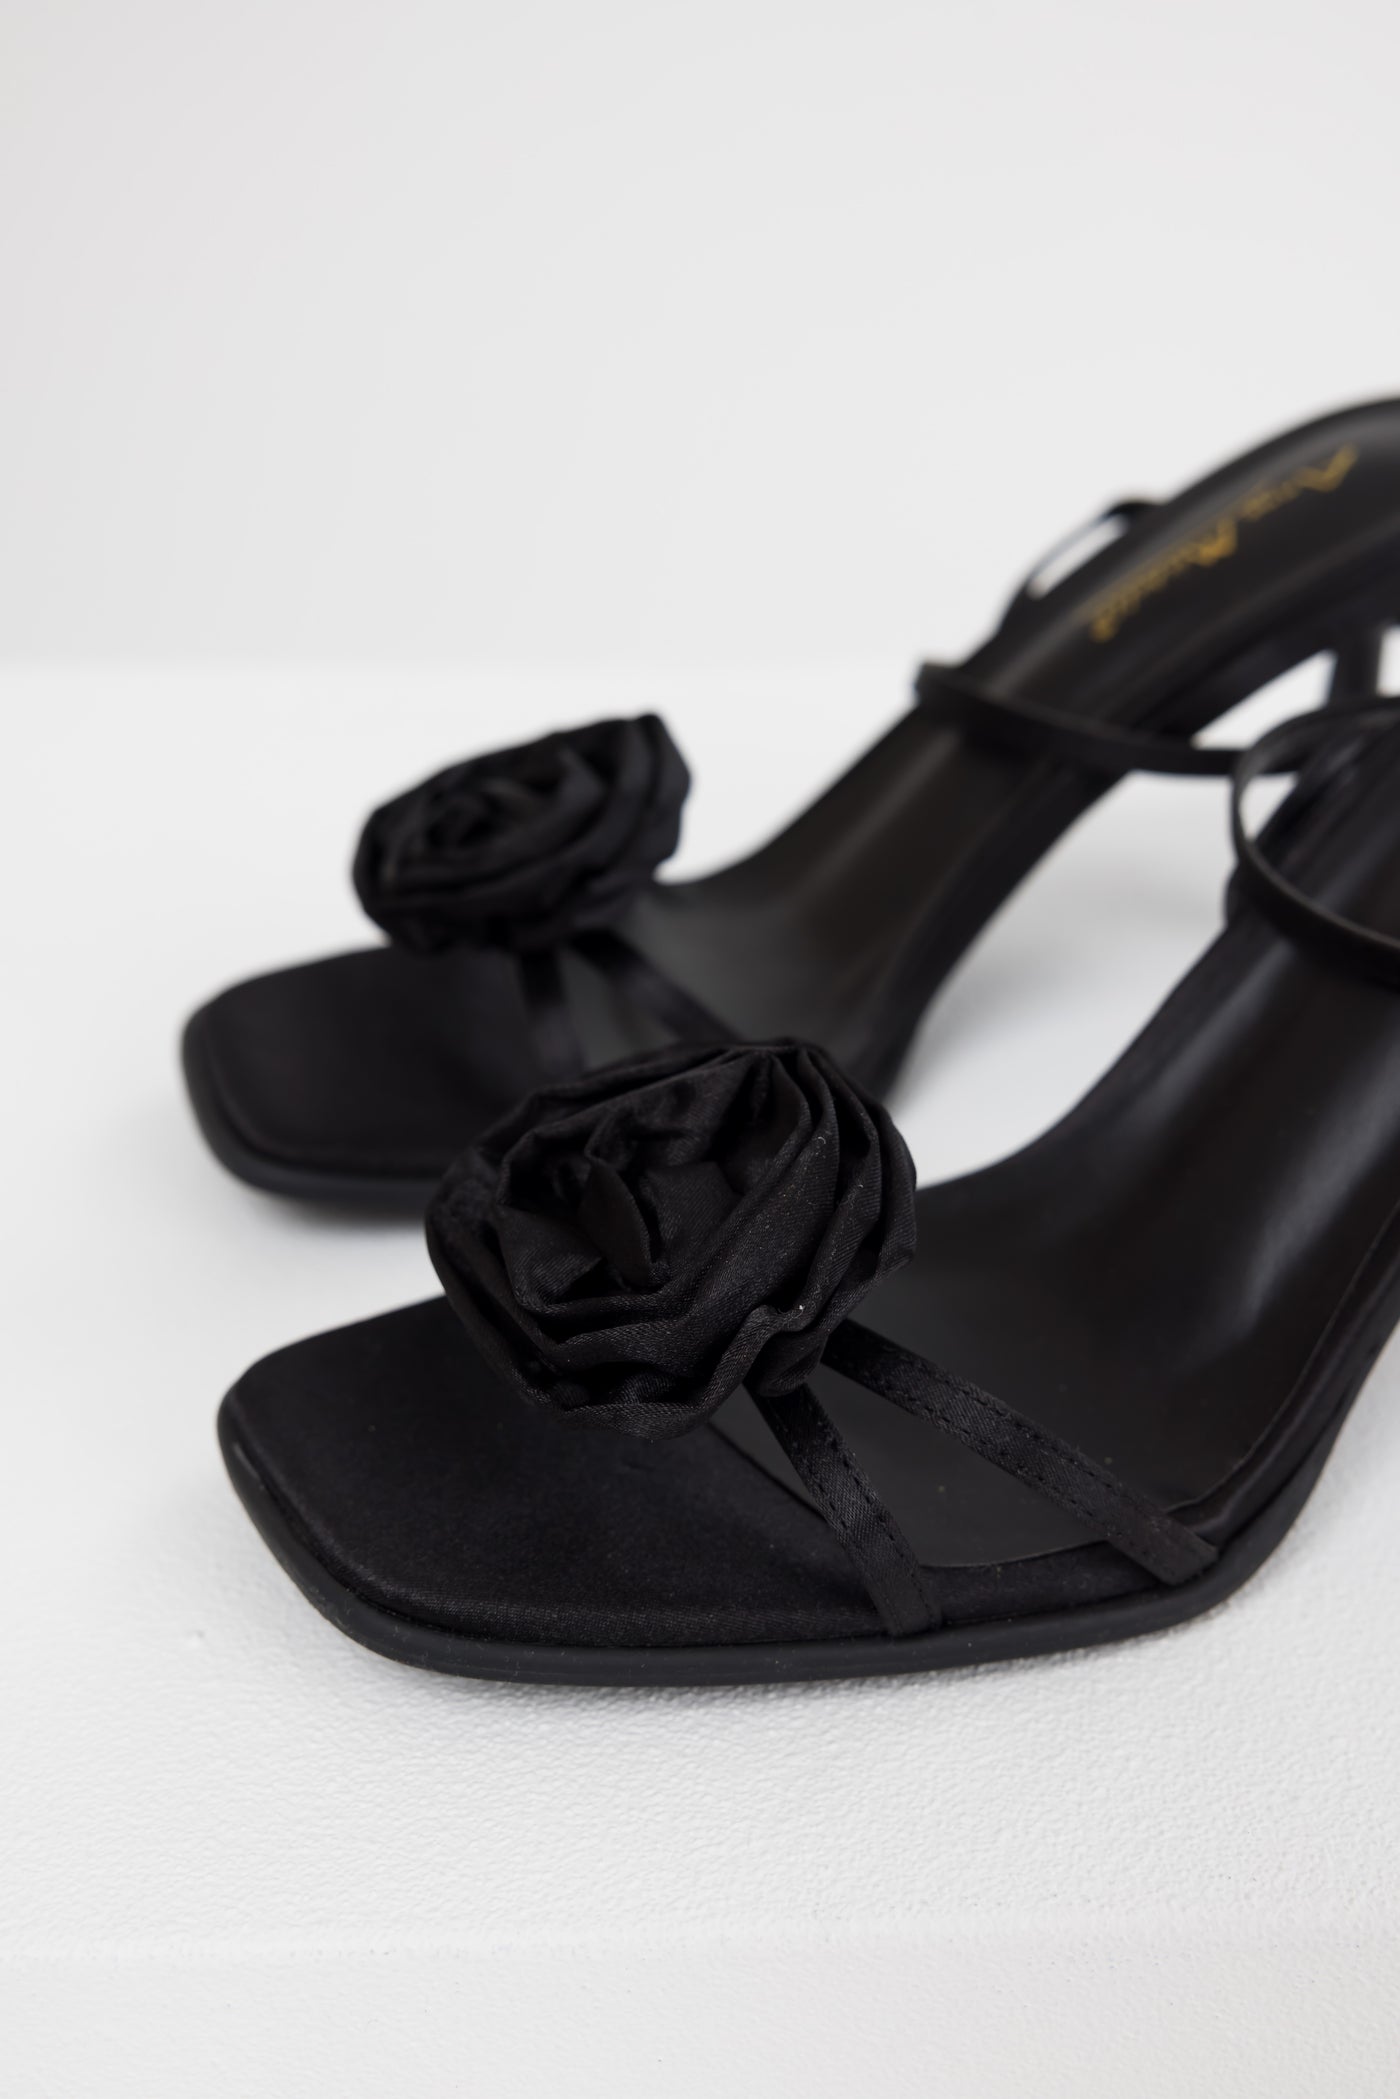 Black Satin Flower Strap Dress Heels